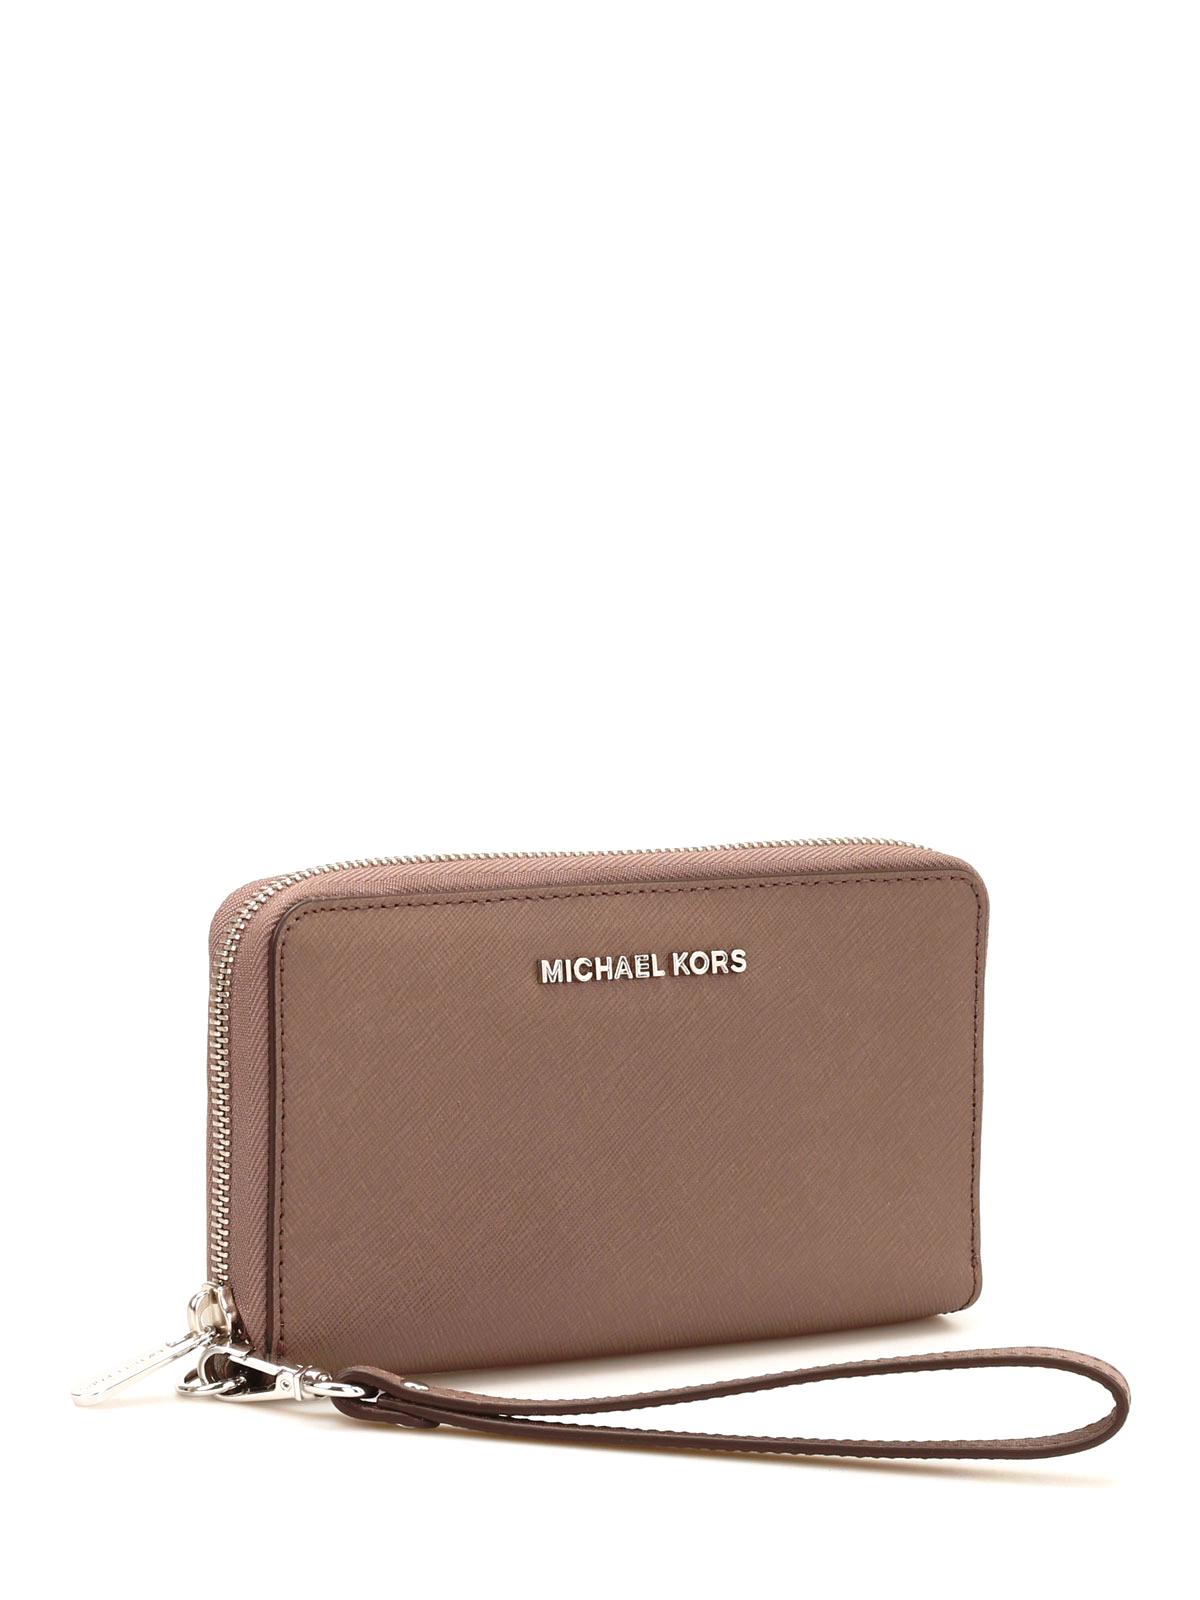 Wallets & purses Michael Kors - Jet Set Travel wallet - 32H4STVE9L513